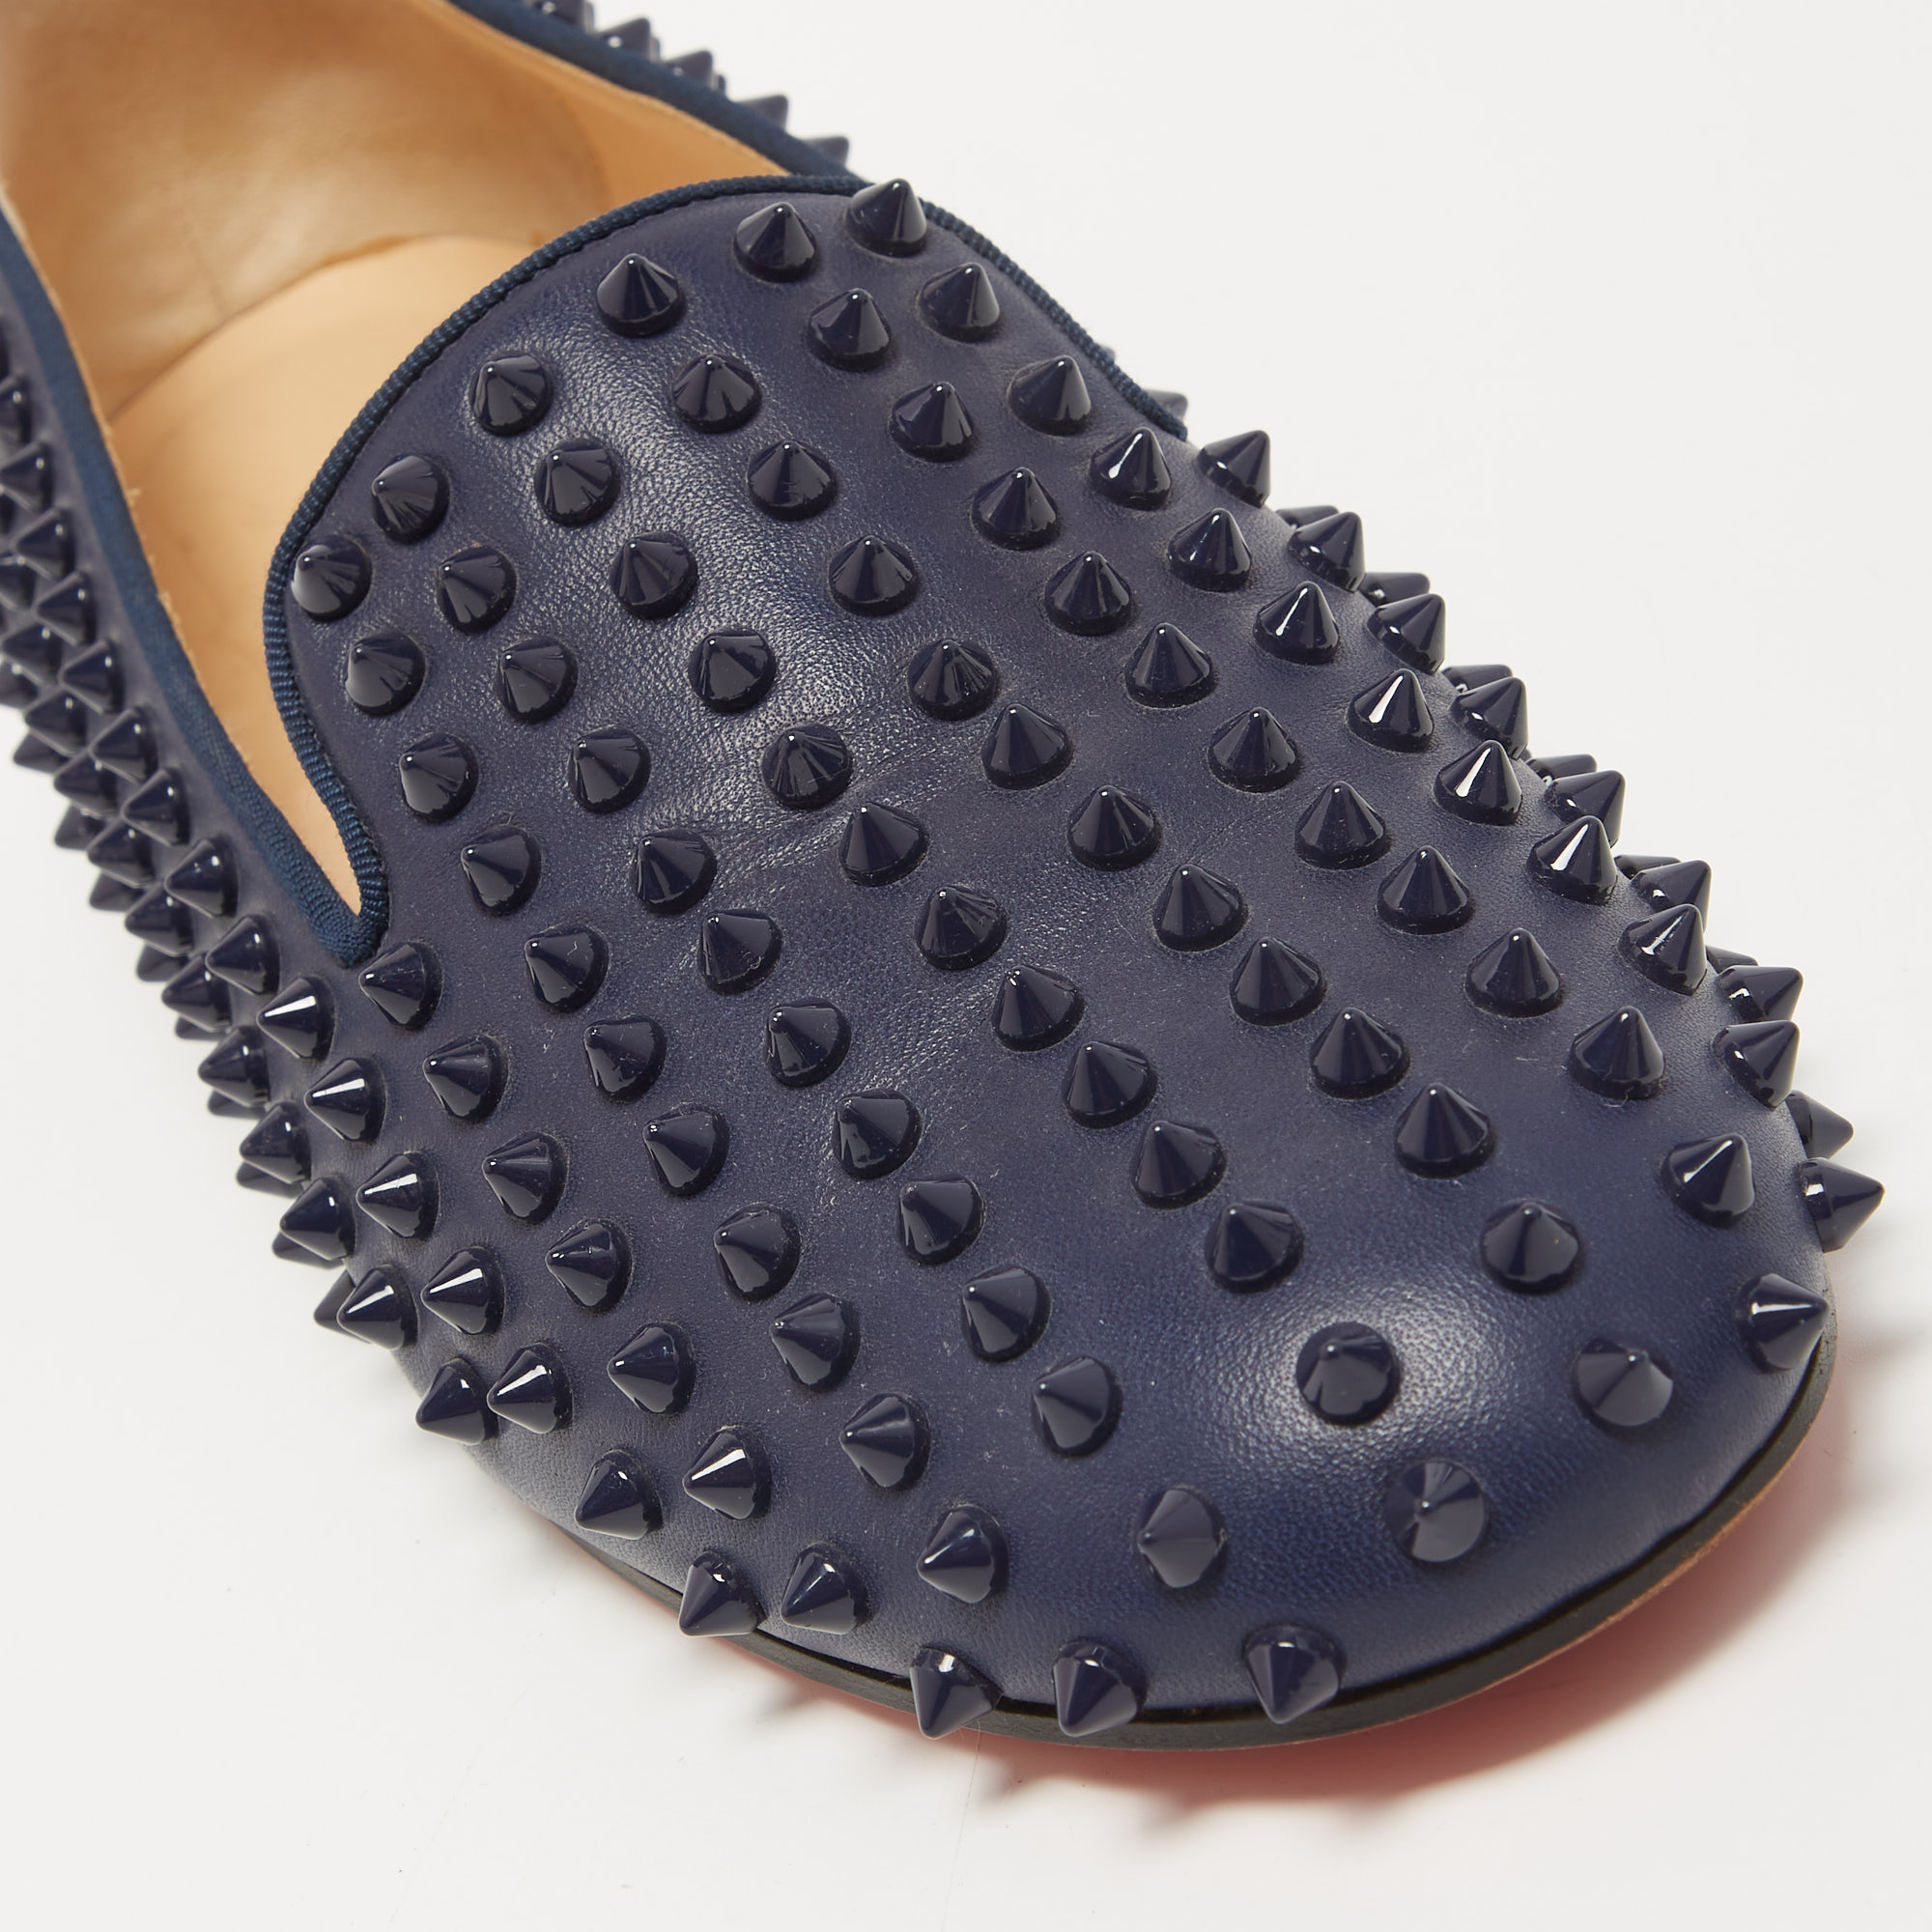 Christian Louboutin Navy Blue Leather Dandelion Spike Slip On Loafers Size 41